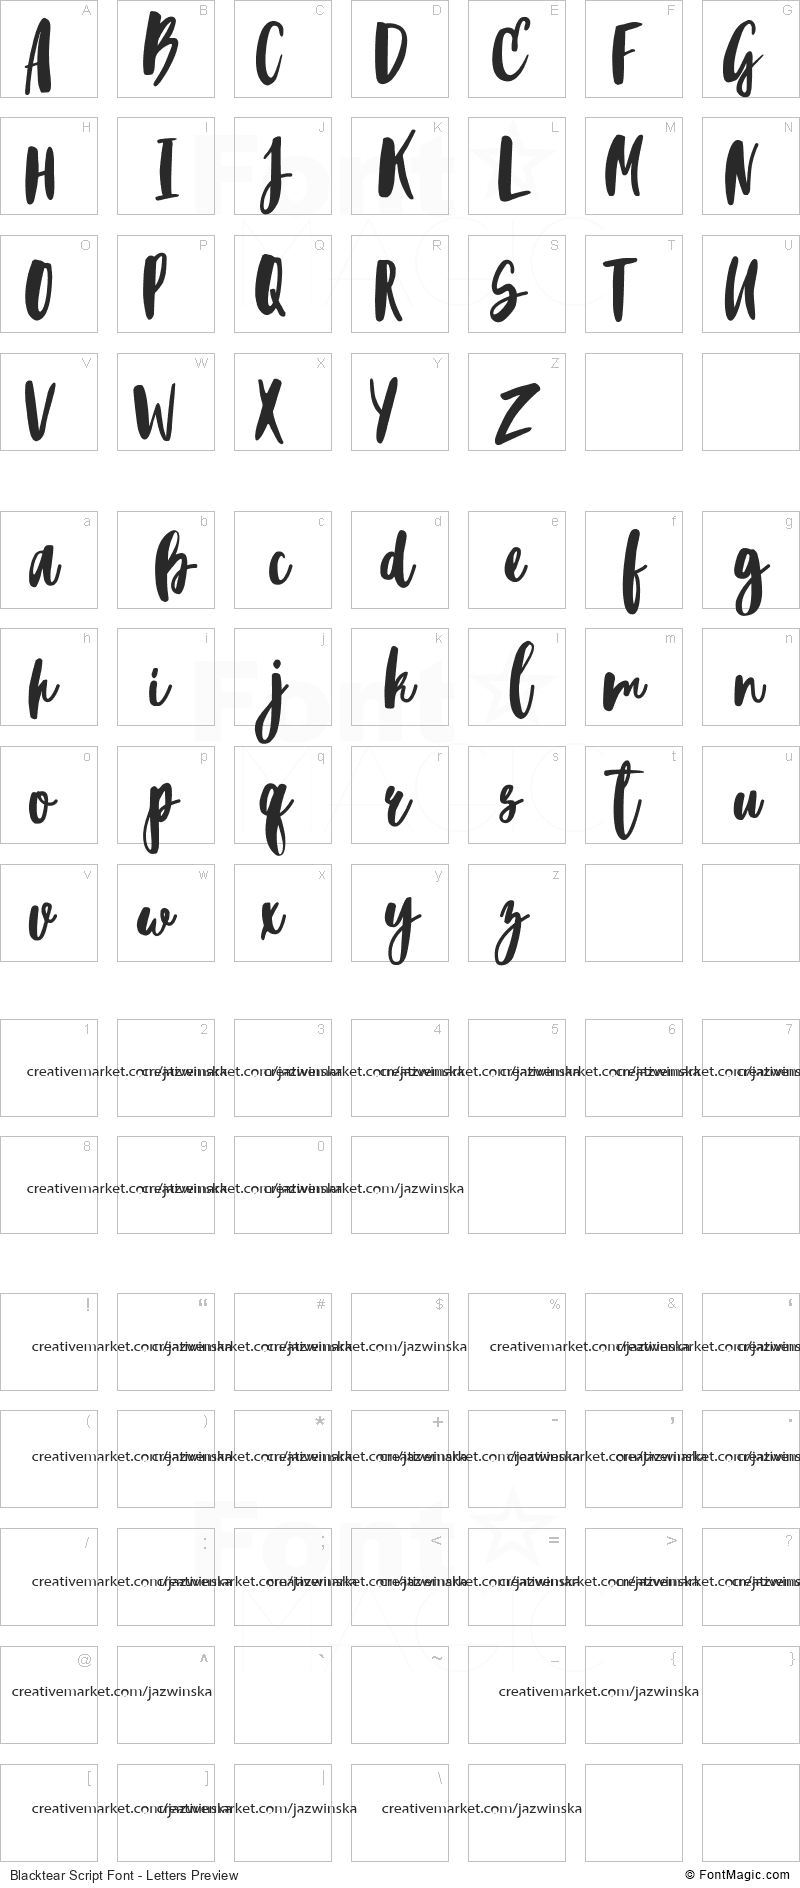 Blacktear Script Font - All Latters Preview Chart